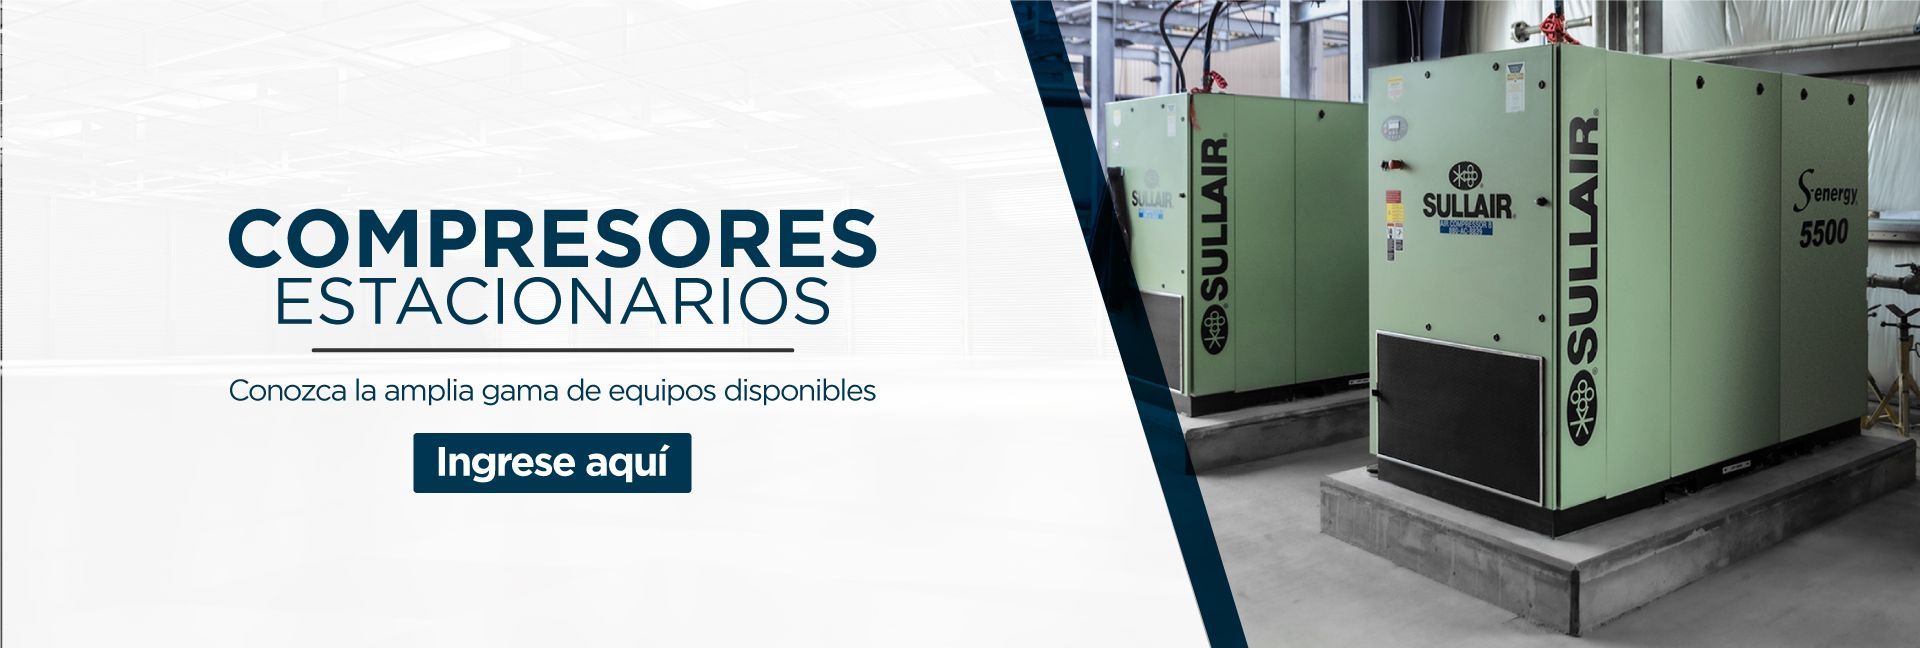 Compresores Estacionarios de Tornillo Lubricado Sullair - Ainsa Colombia